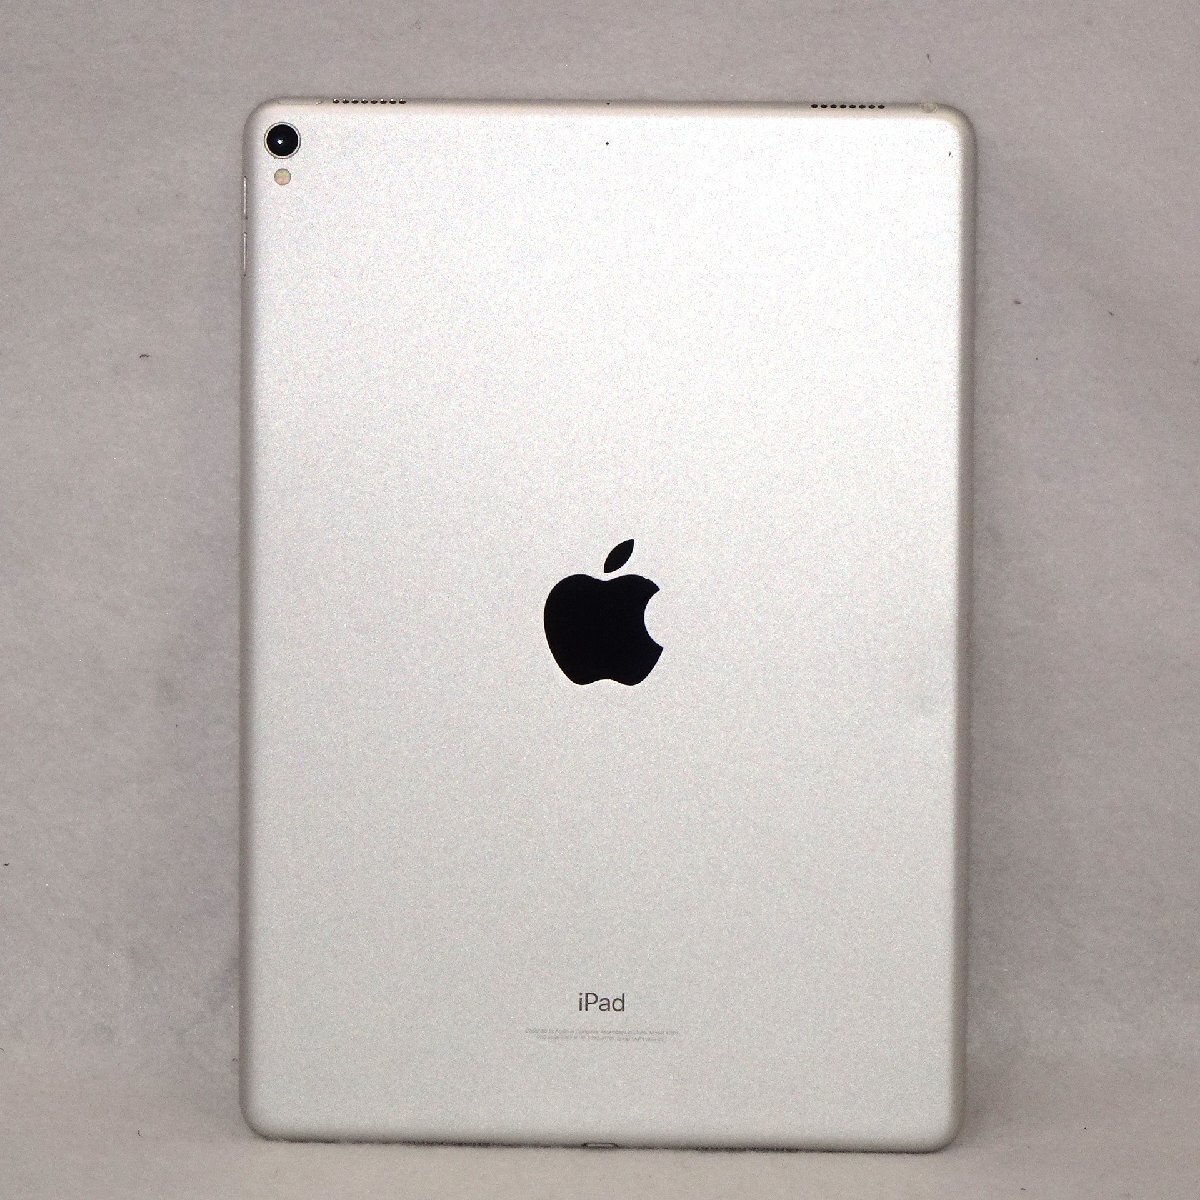 1 jpy ~[ Junk ]Apple iPadPro Wi-Fi 64GB MQDW2J/A silver 10.5 -inch iPadOS[ Tochigi shipping ]